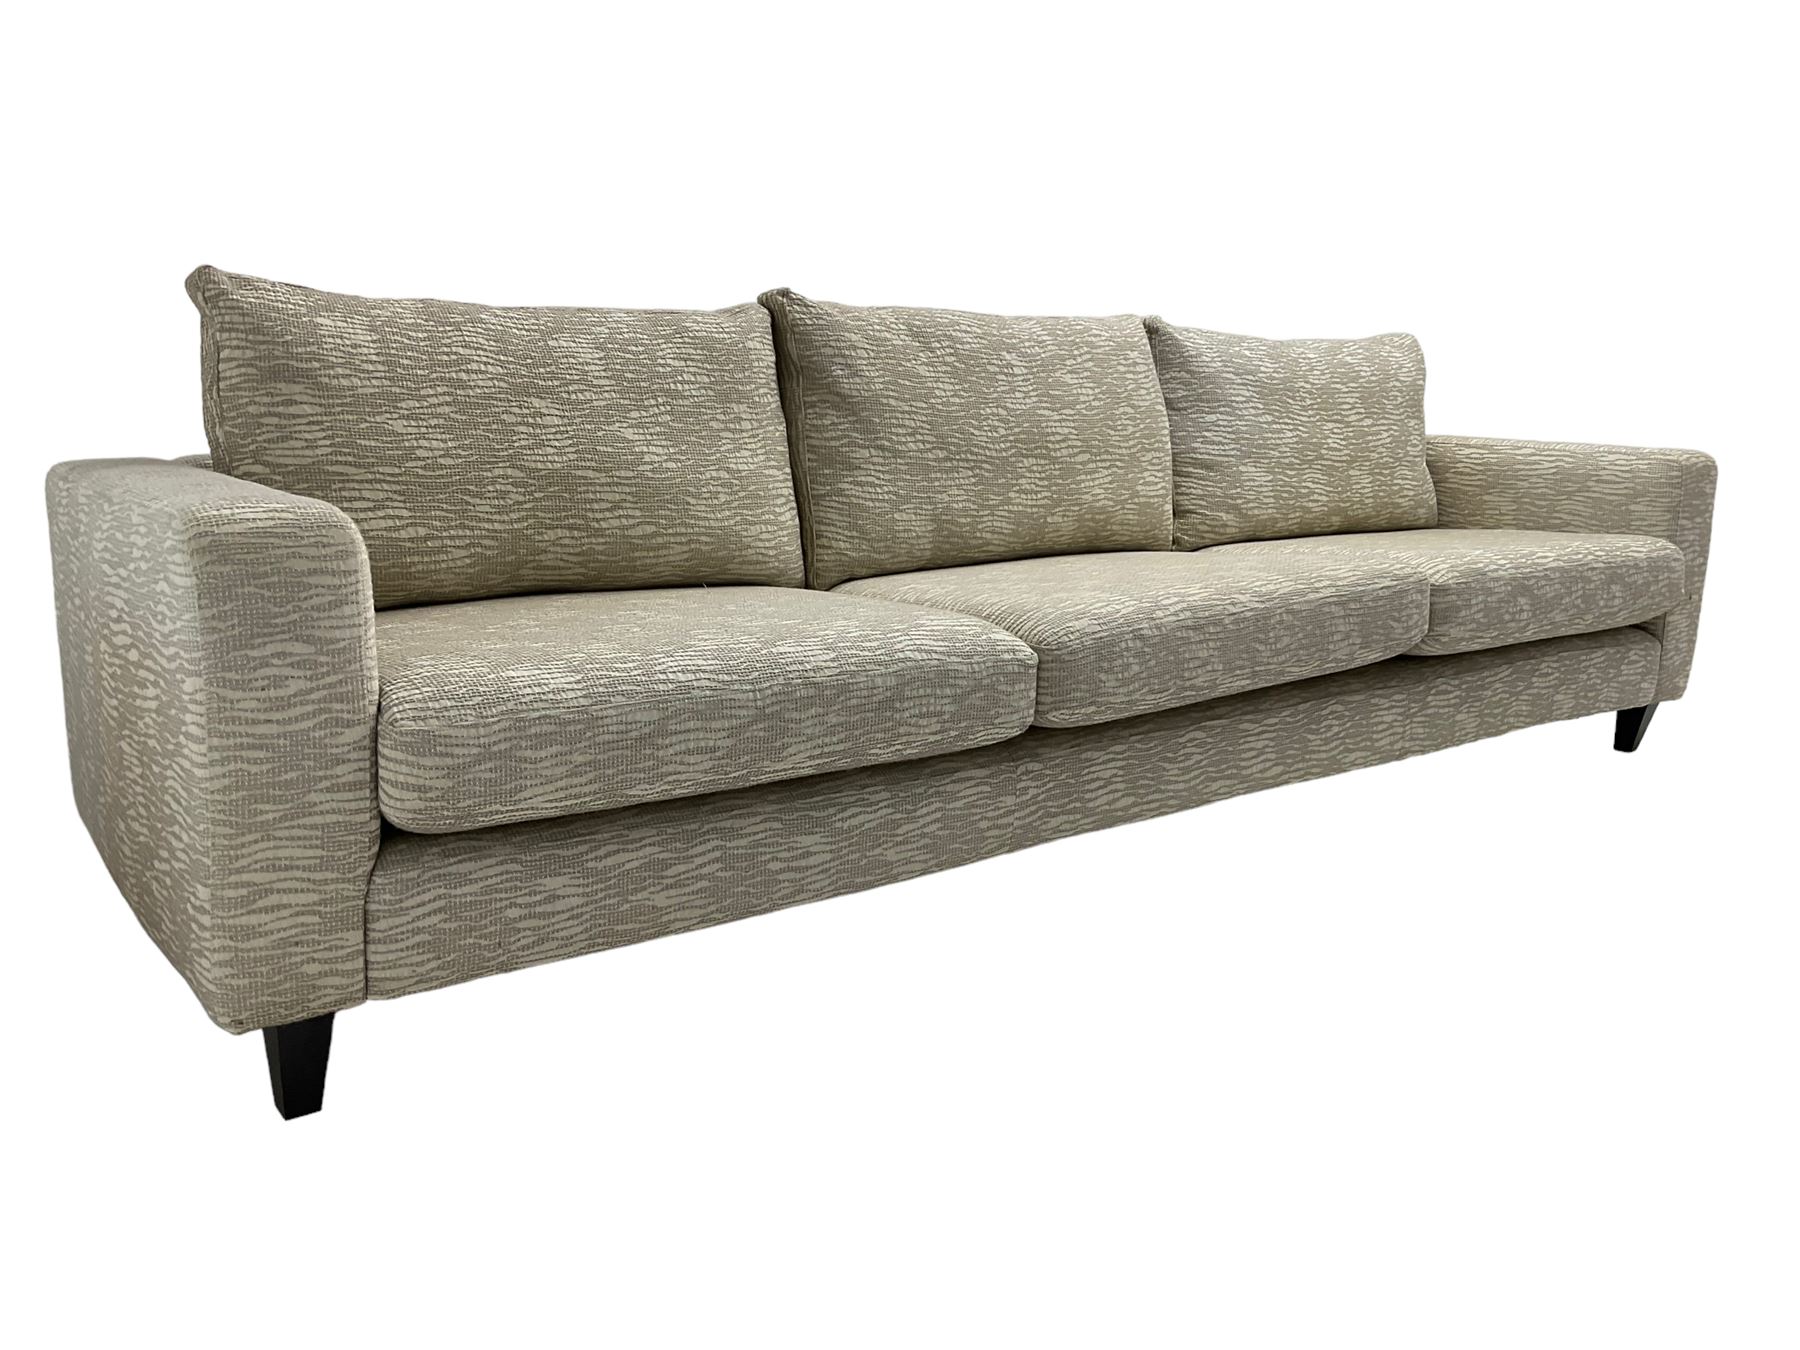 Orior - contemporary large three seat sofa - Image 6 of 7